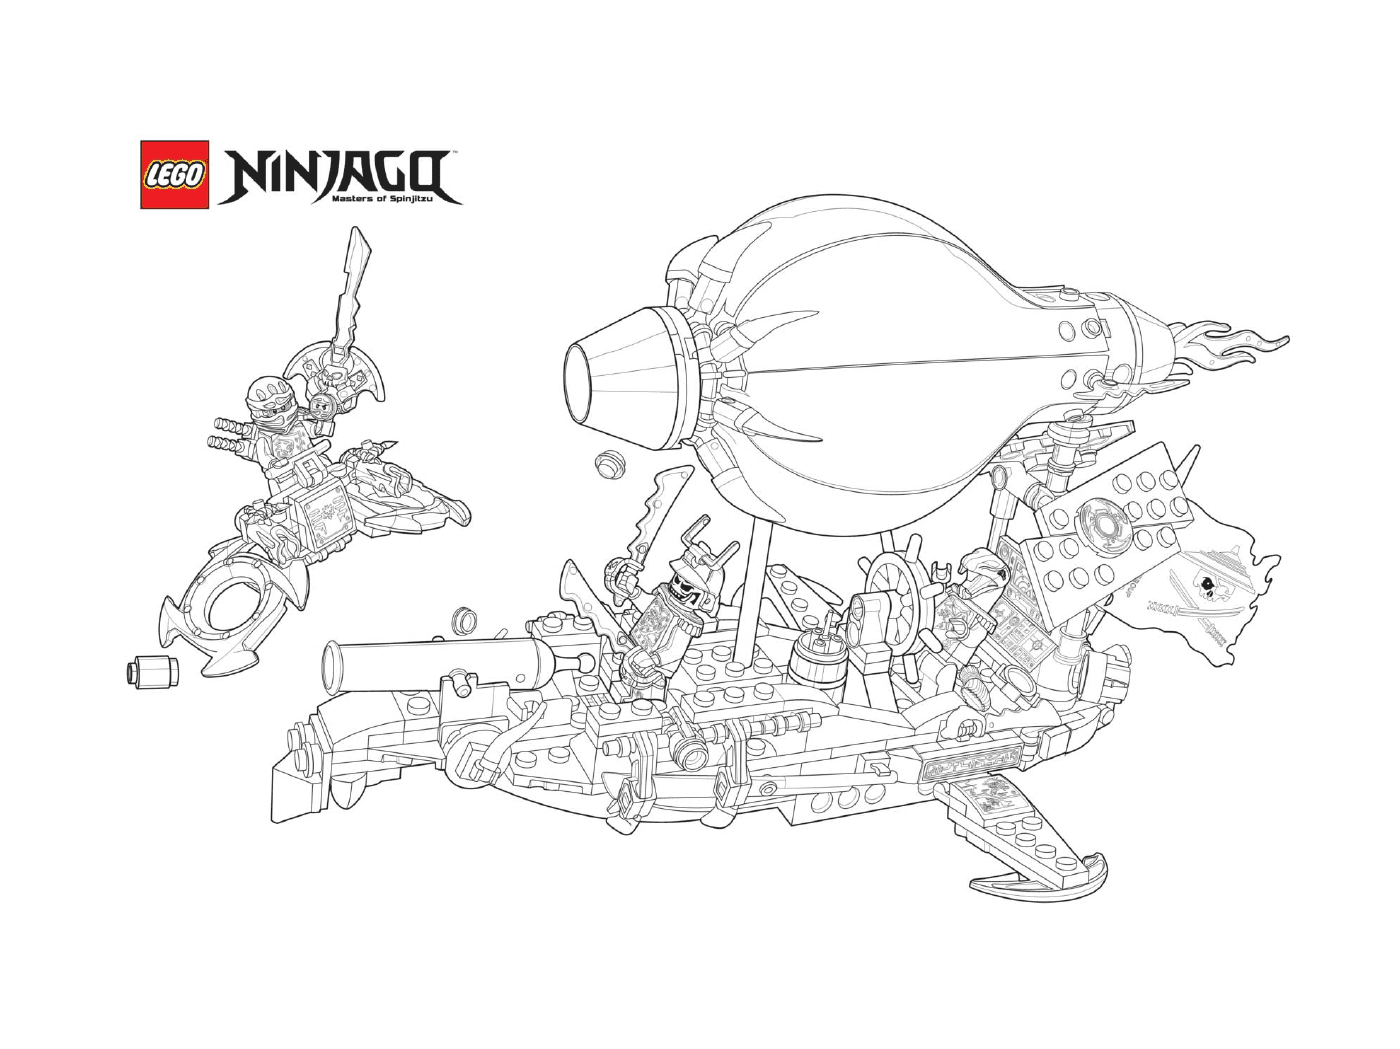  Ninjago vs. Feinde mit dem Boot 